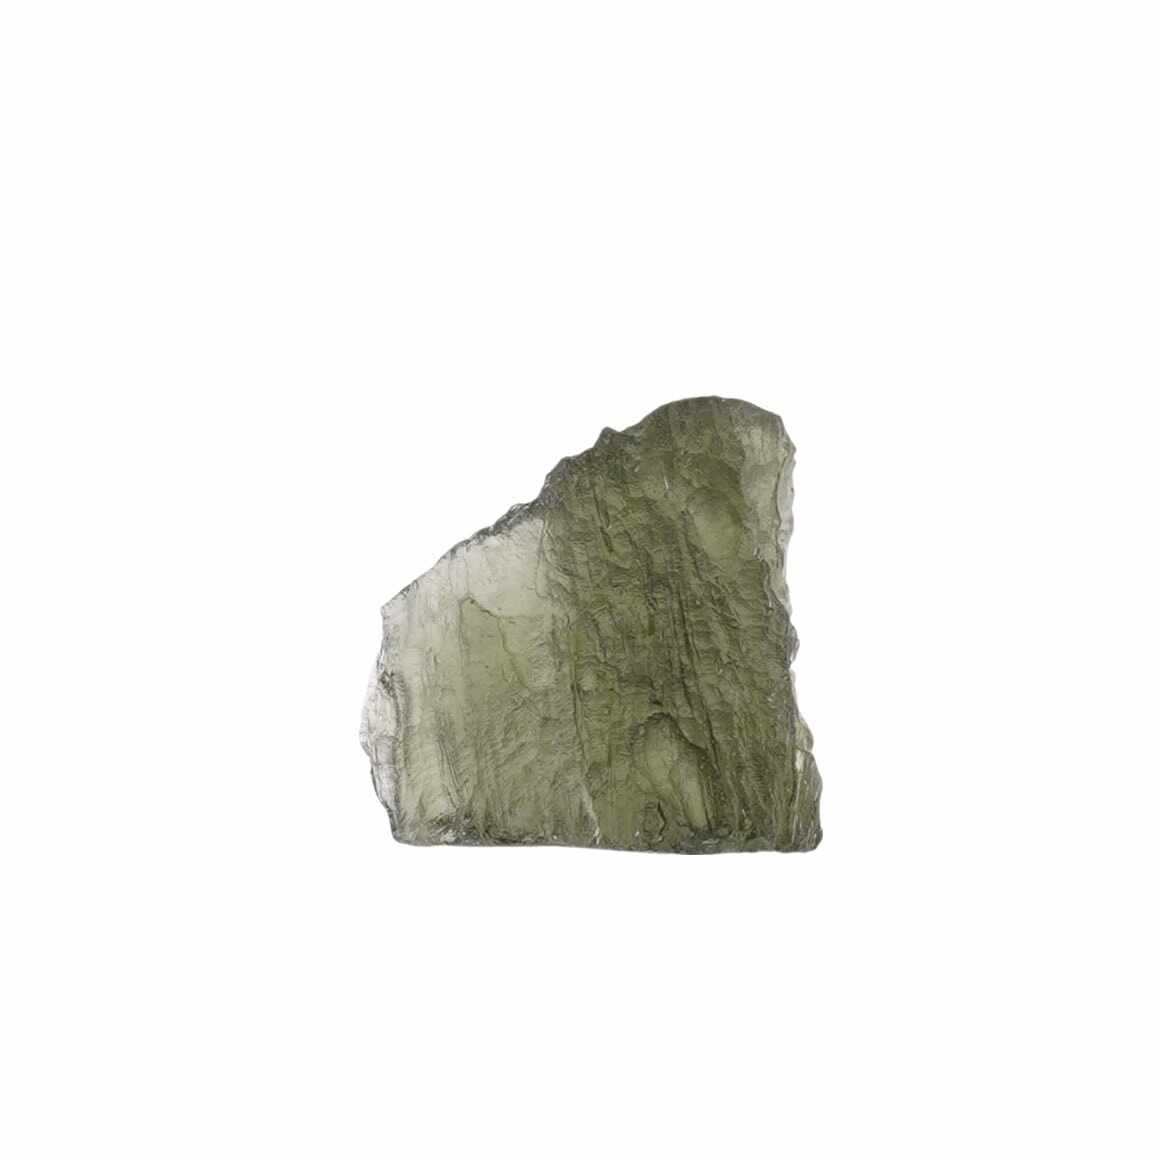 Moldavit cristal natural unicat a67